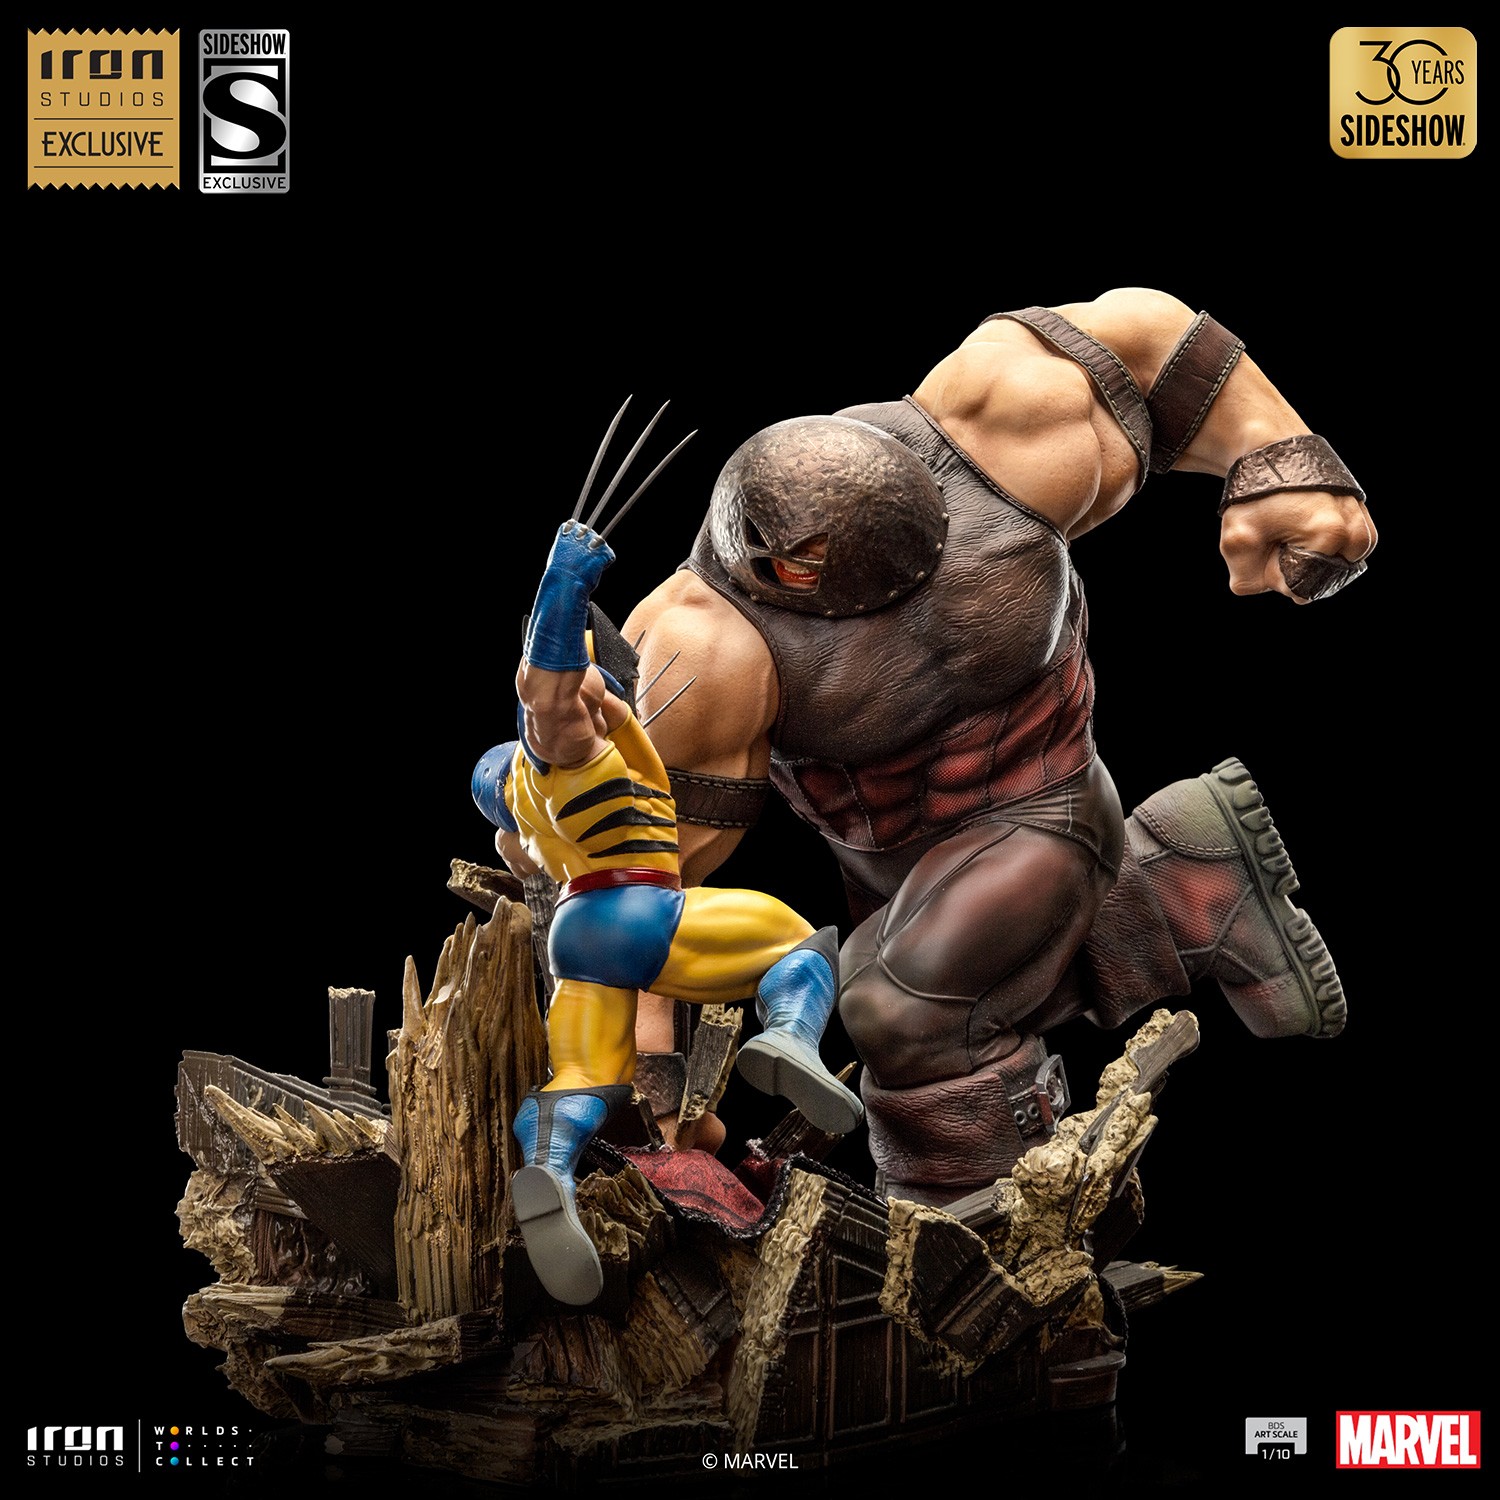 Wolverine vs Juggernaut Exclusive Edition (Prototype Shown) View 6